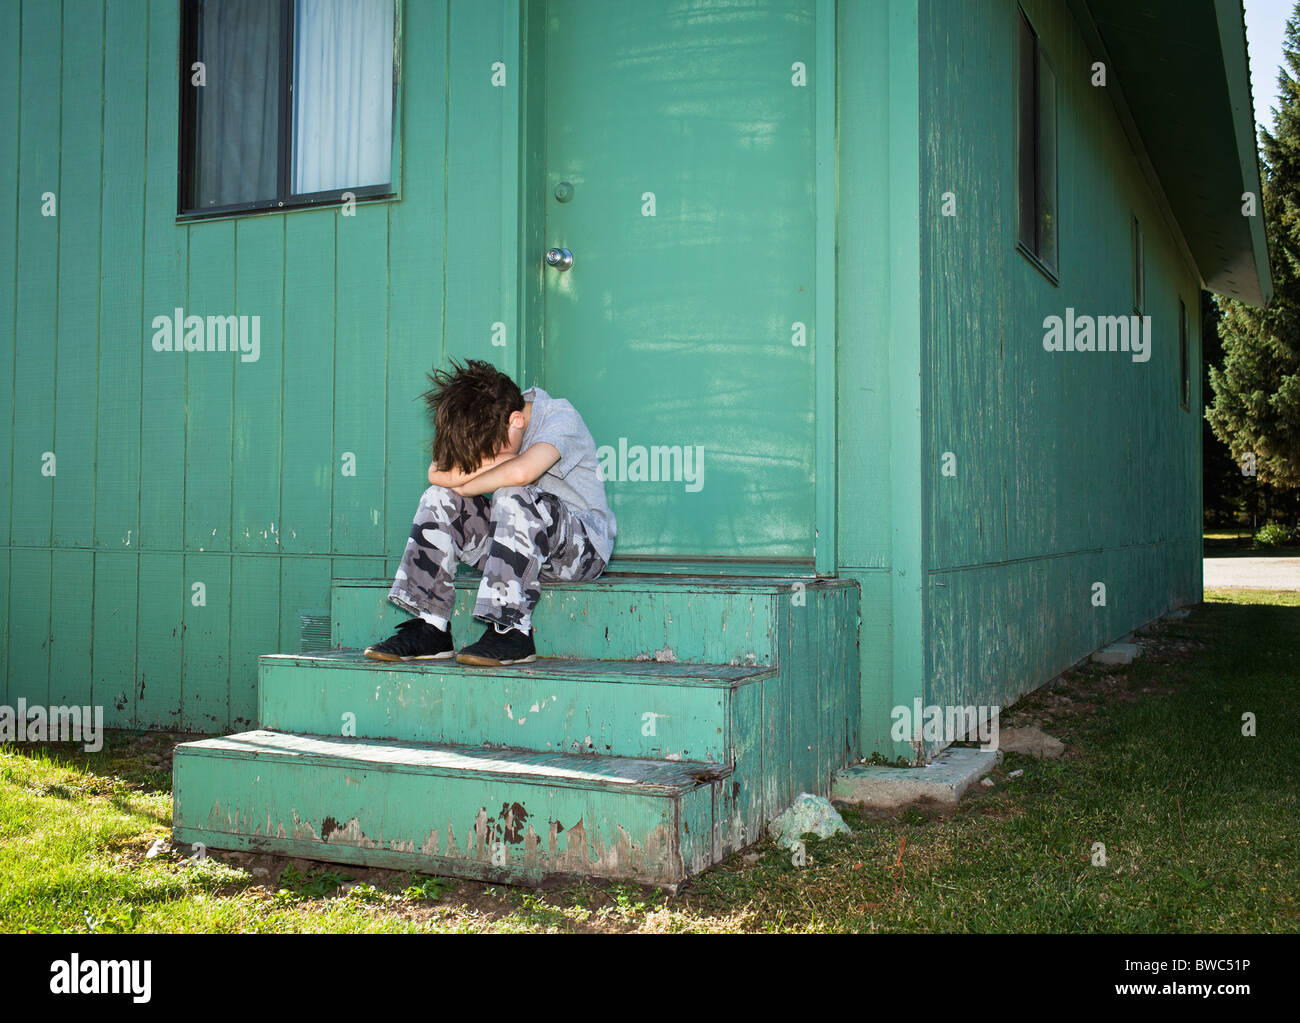 Boy Sulking on steps Stock Photo